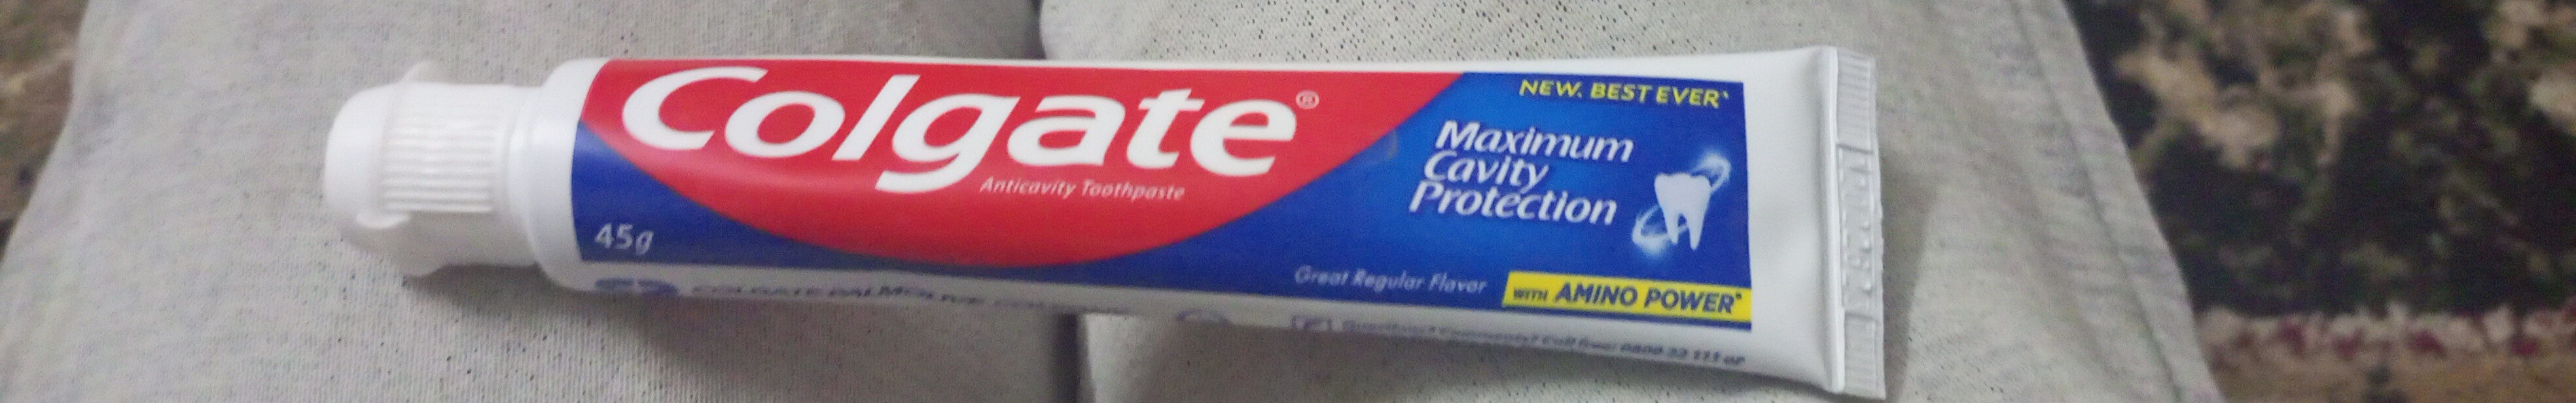 Colgate anticavity toothpaste - Produit - en